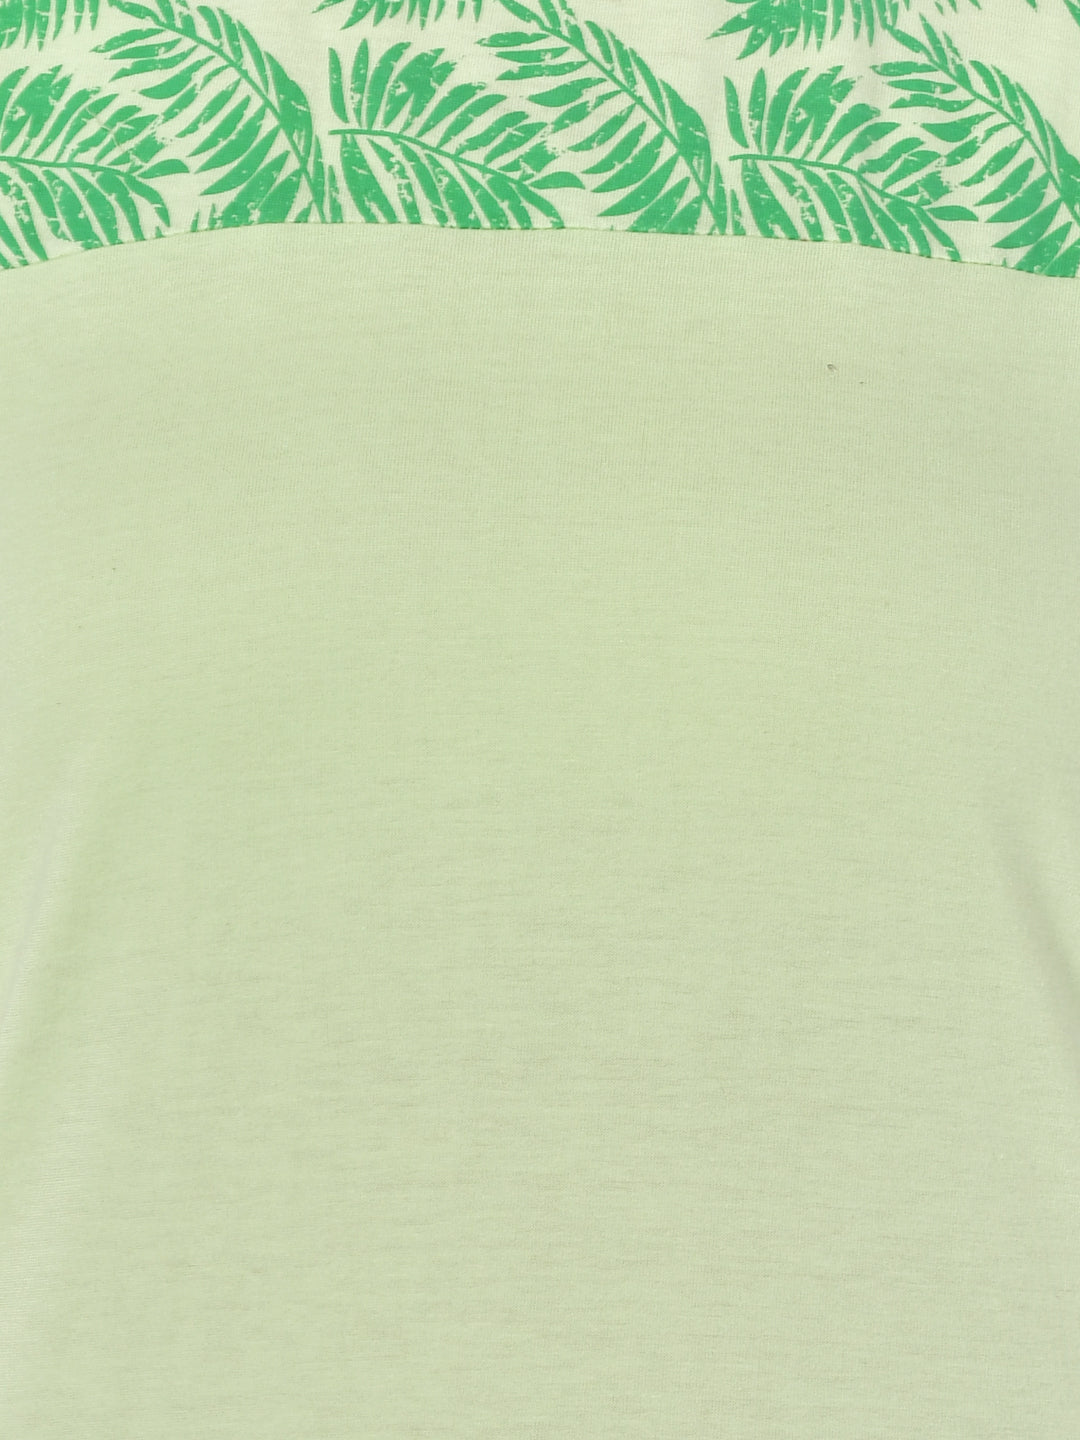 Klamotten Women's Sea Green Allover Printed Top Pyjama Set N32Gs